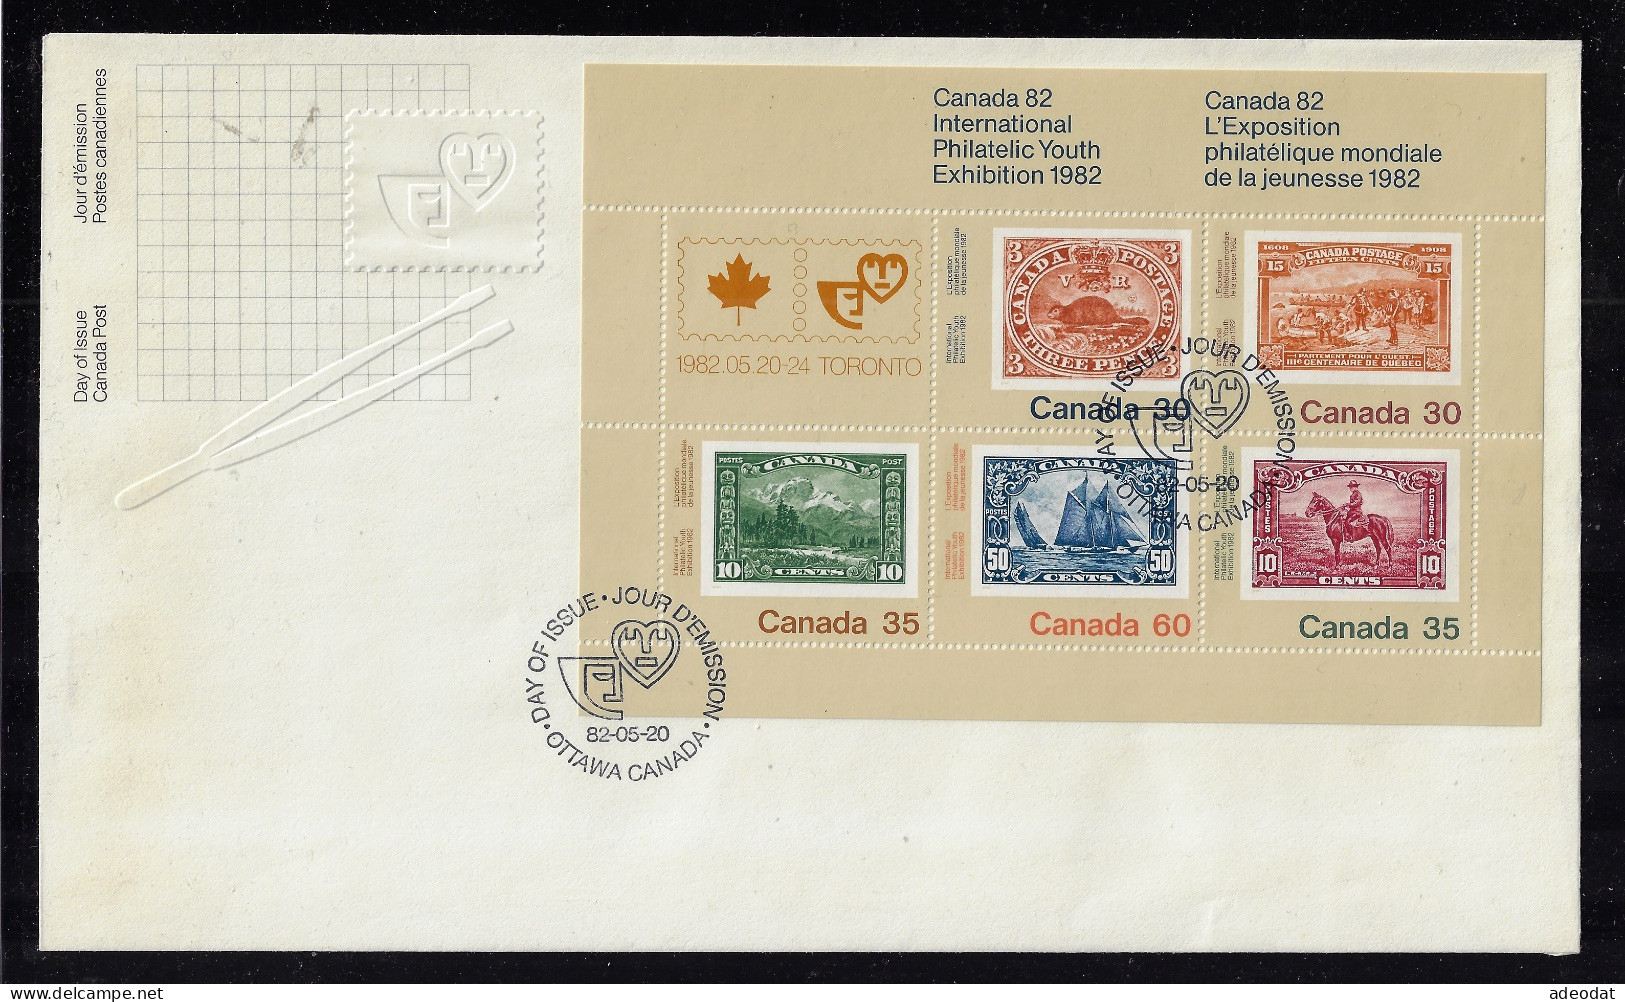 CANADA 1982 INTERNATIONAL YOUTH EXHIBITION FDC  SCOTT #909-913 - 1981-1990